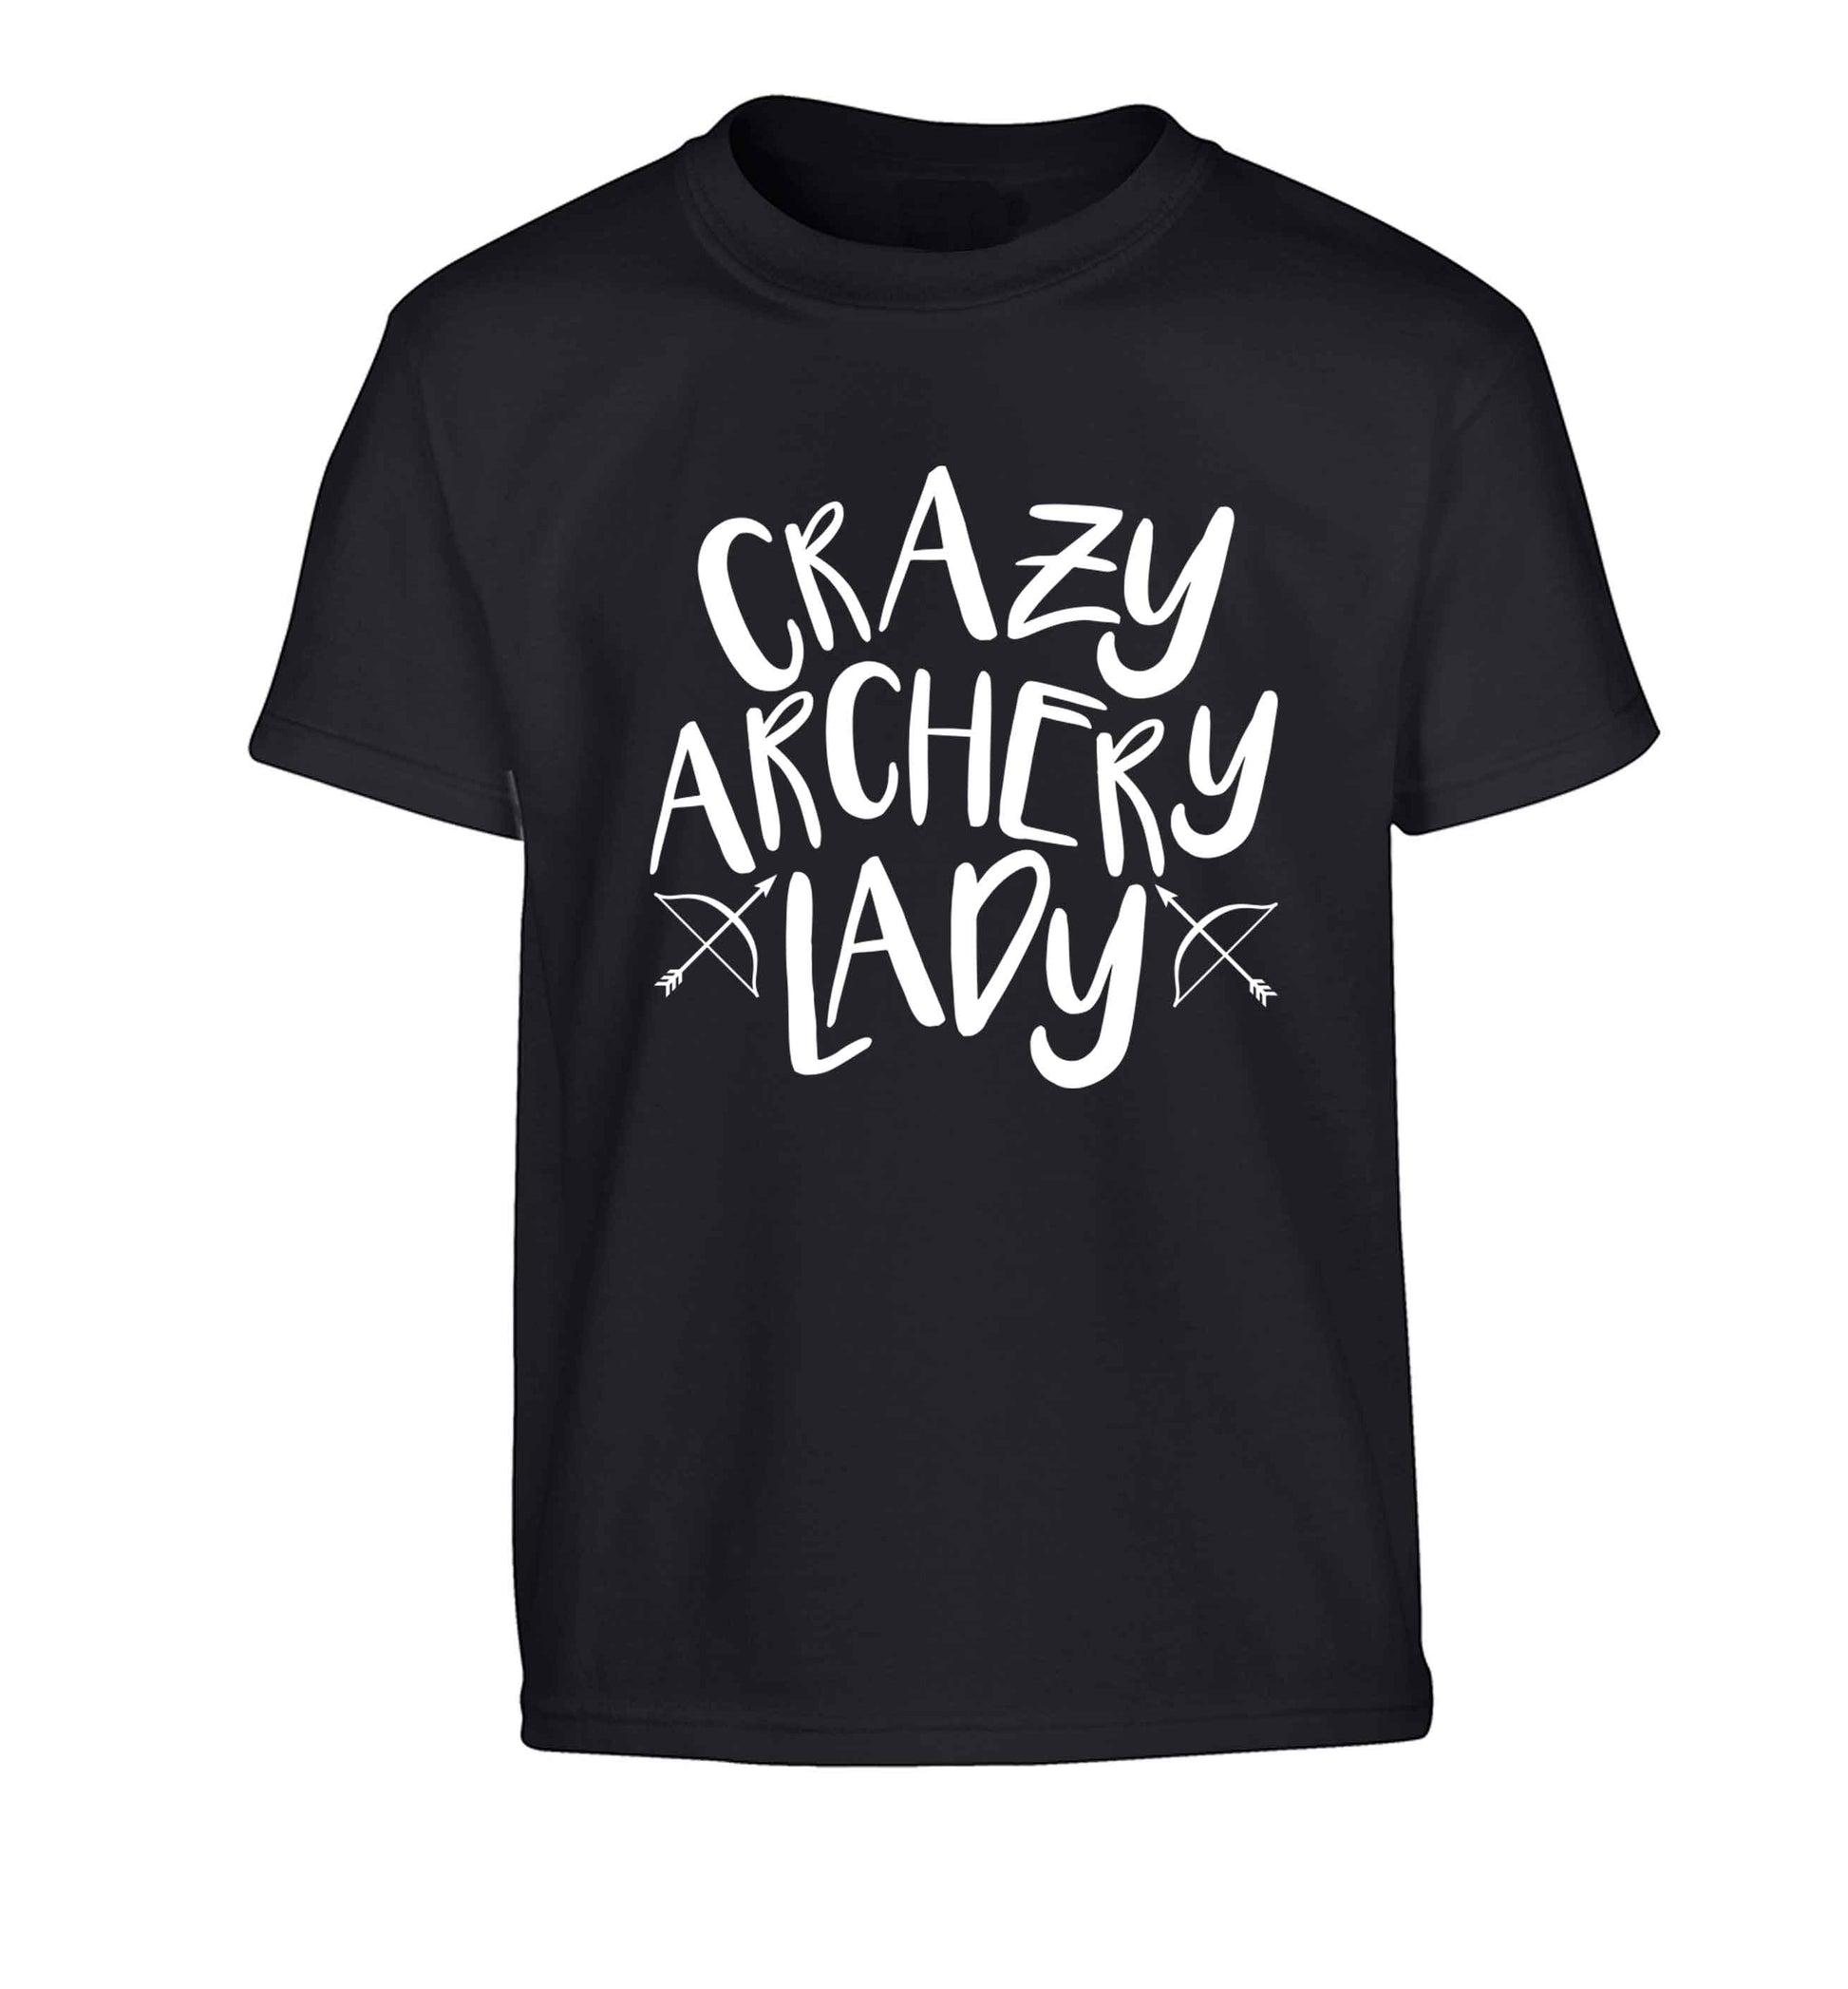 Crazy archery lady Children's black Tshirt 12-13 Years